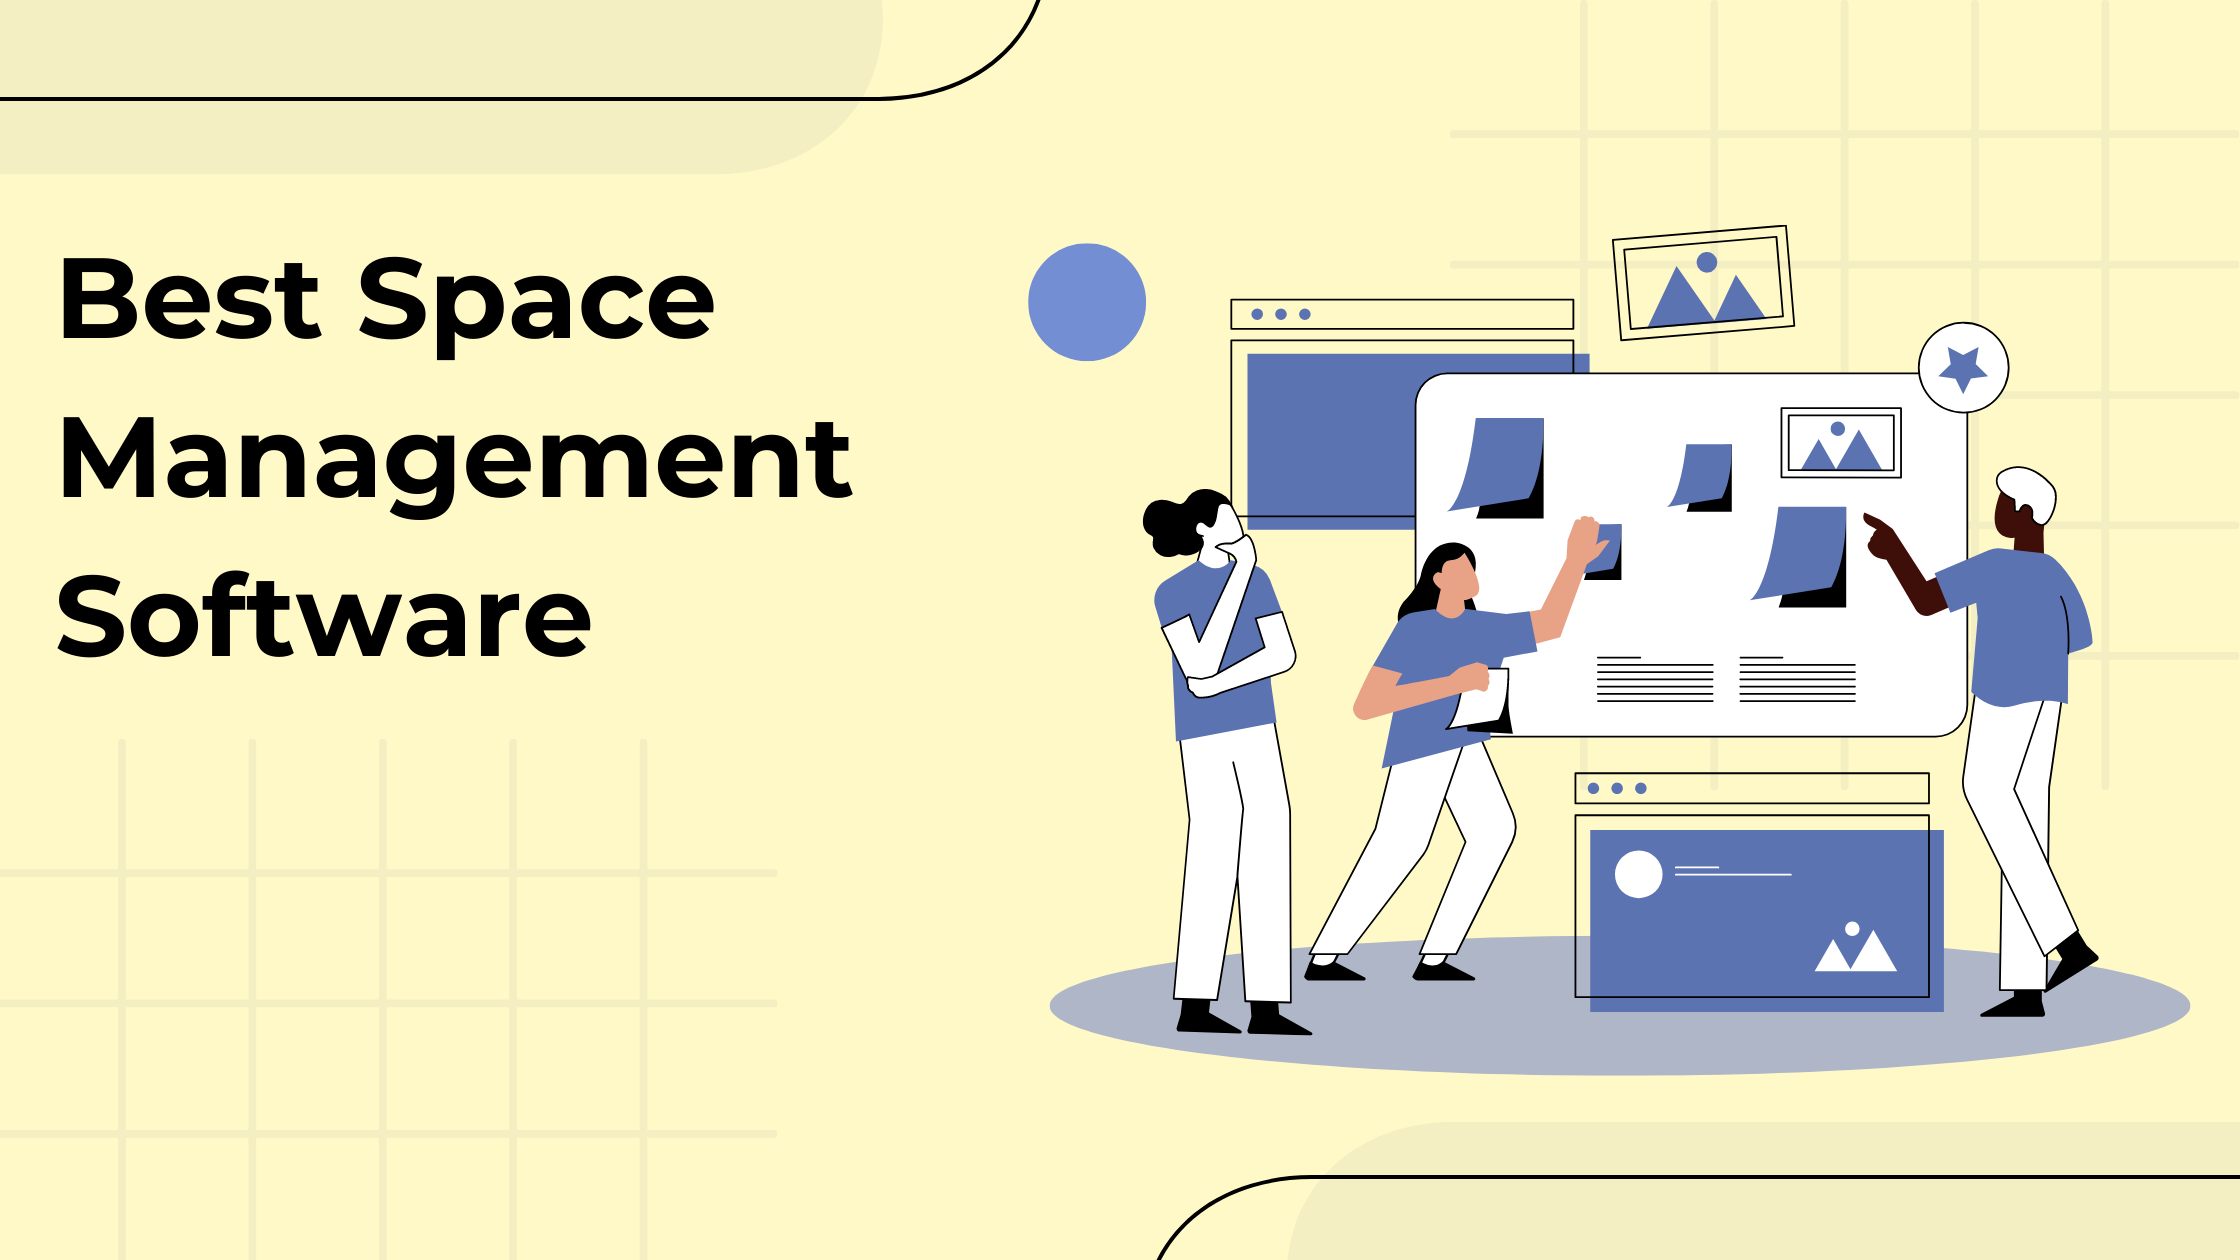 Best Space Management Software